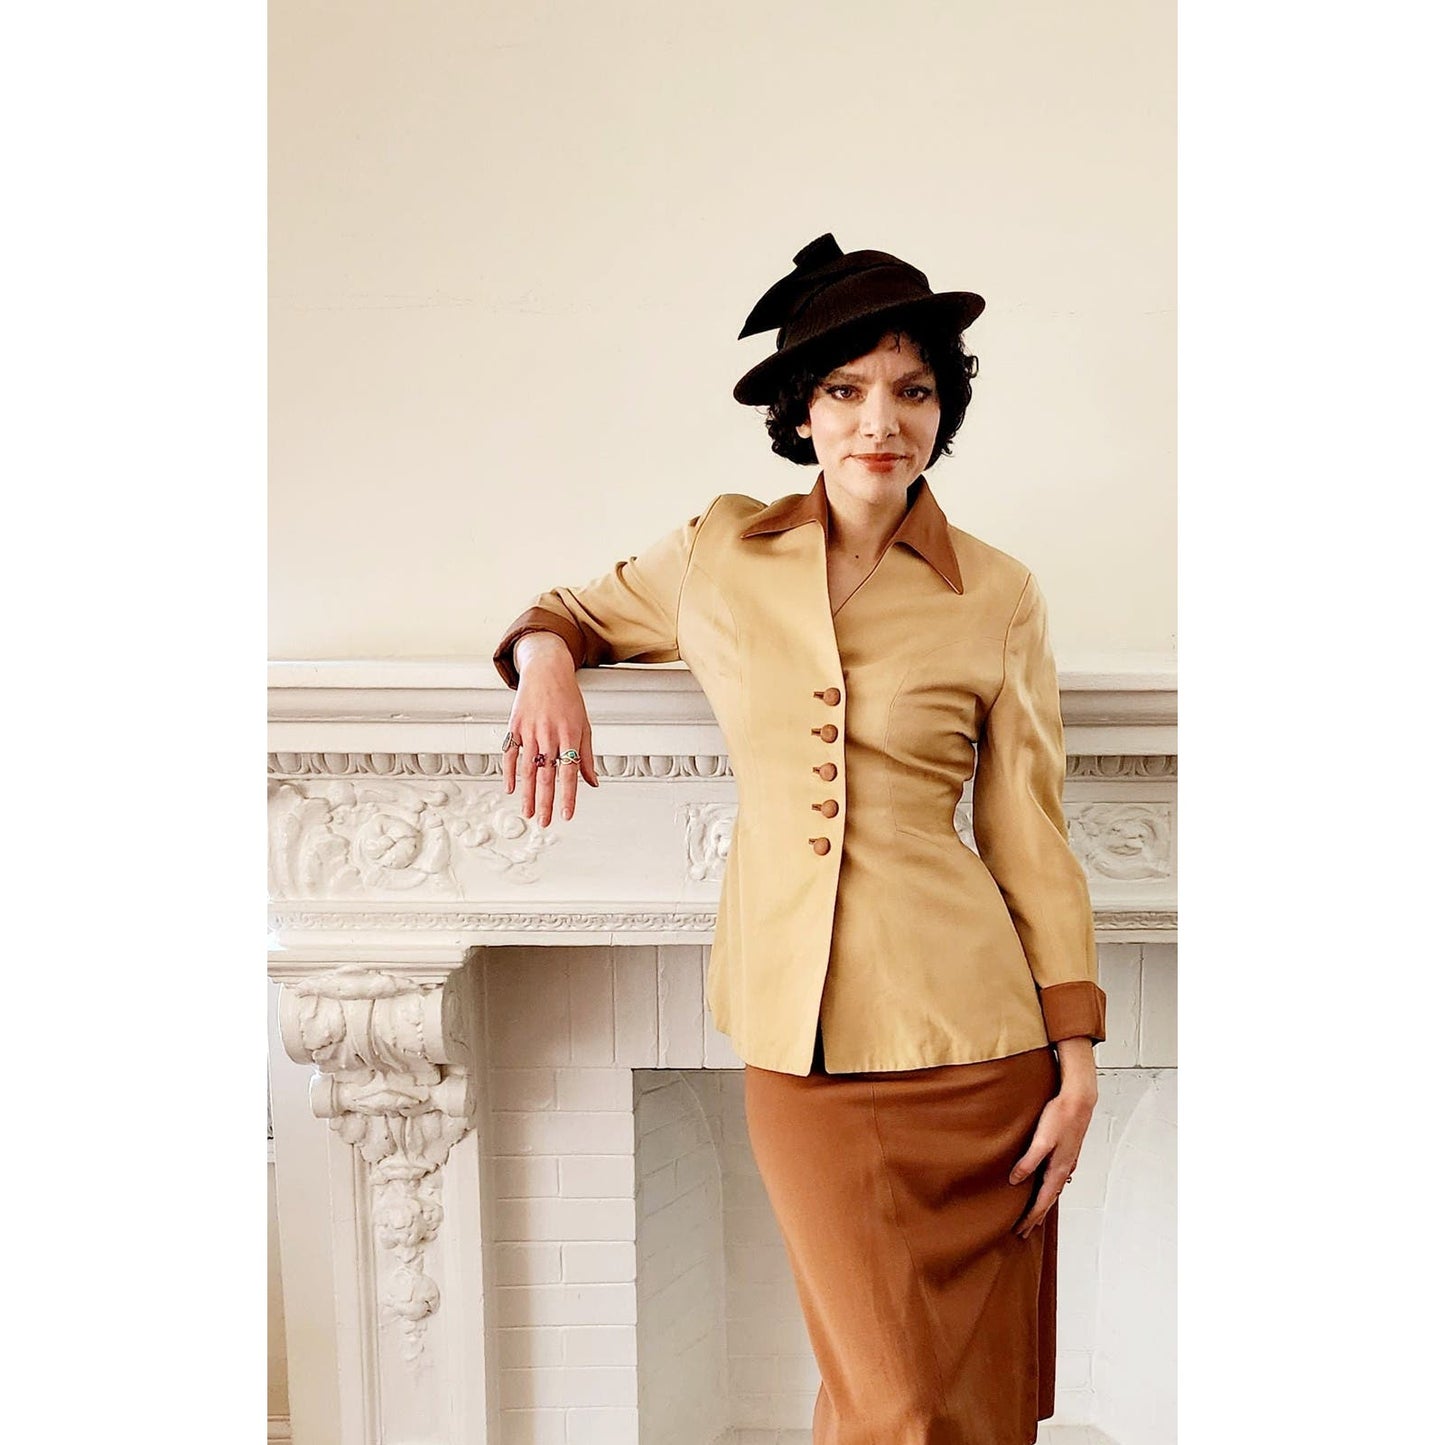 Vintage 40s Skirt Suit Beige Tan Gabardine Wool Large Collar